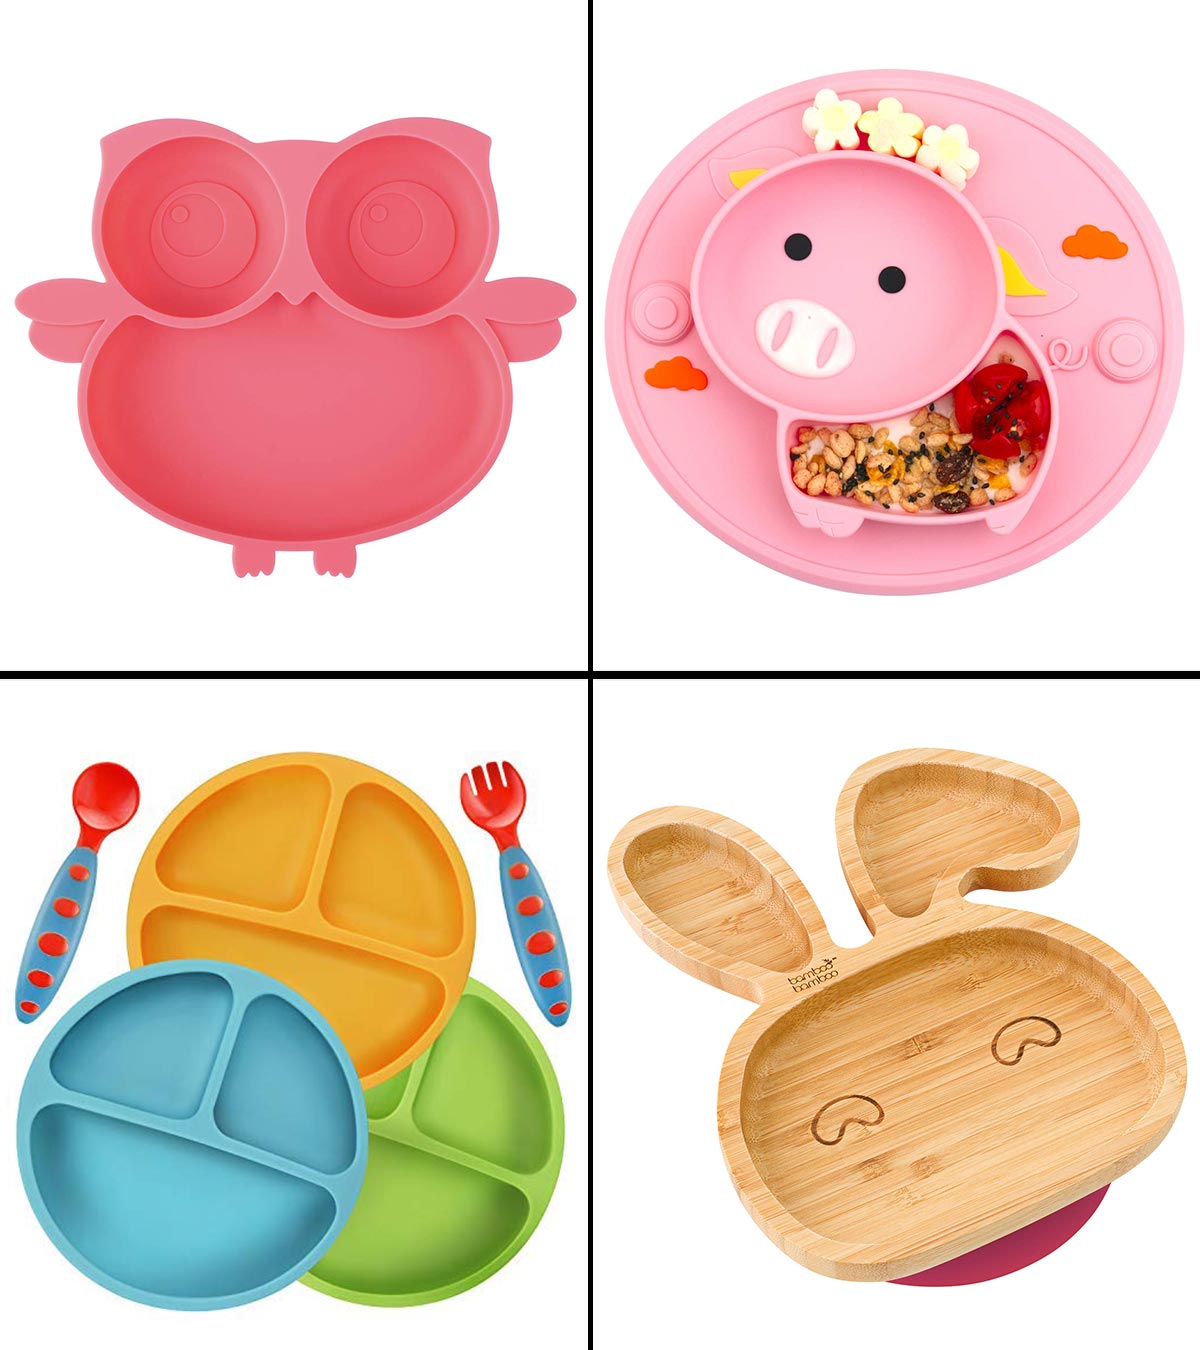 https://www.momjunction.com/wp-content/uploads/2020/06/15-Best-Baby-Plates-To-Buy-In-2020-Banner.jpg